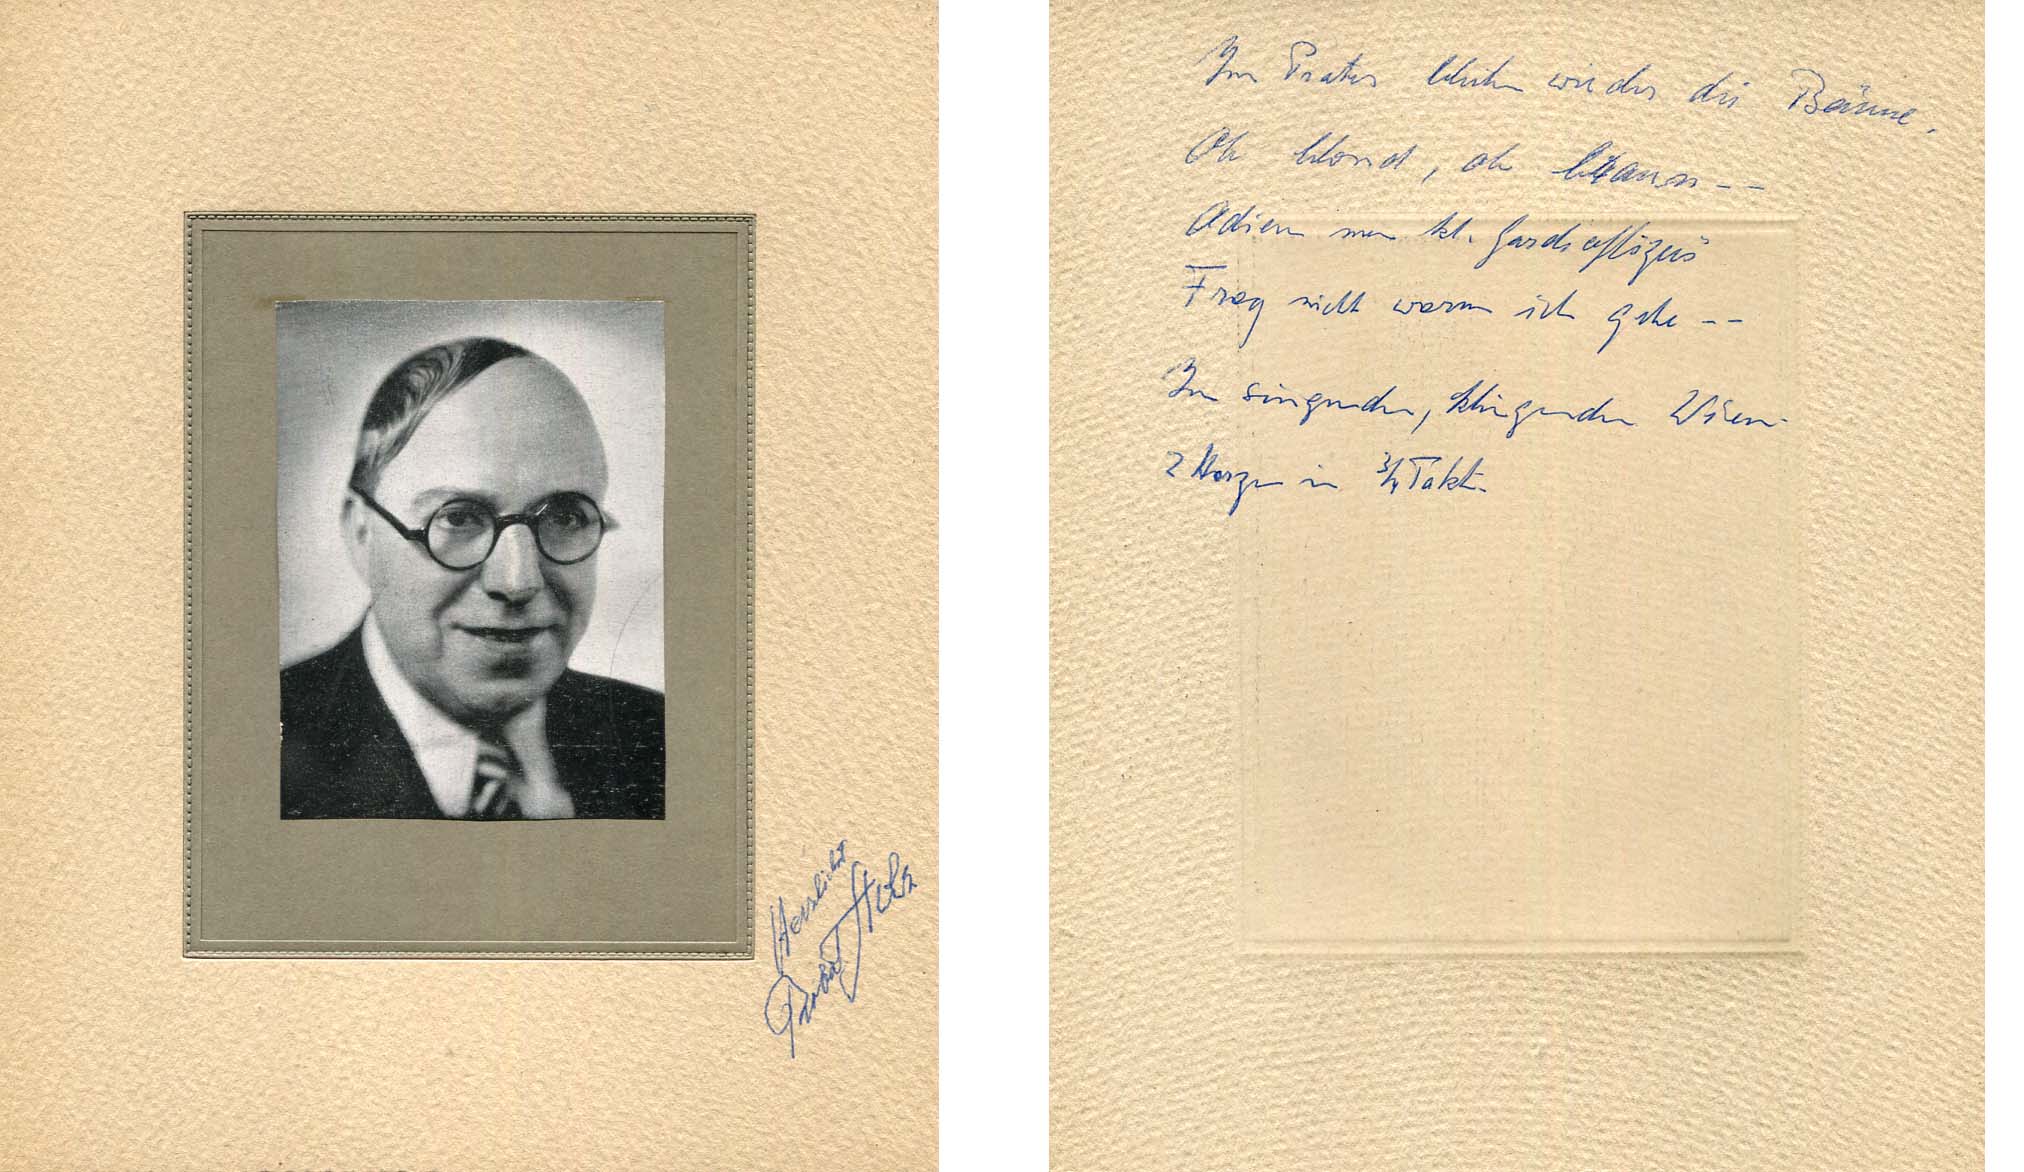 Robert Stolz Autograph Autogramm | ID 7630132314261